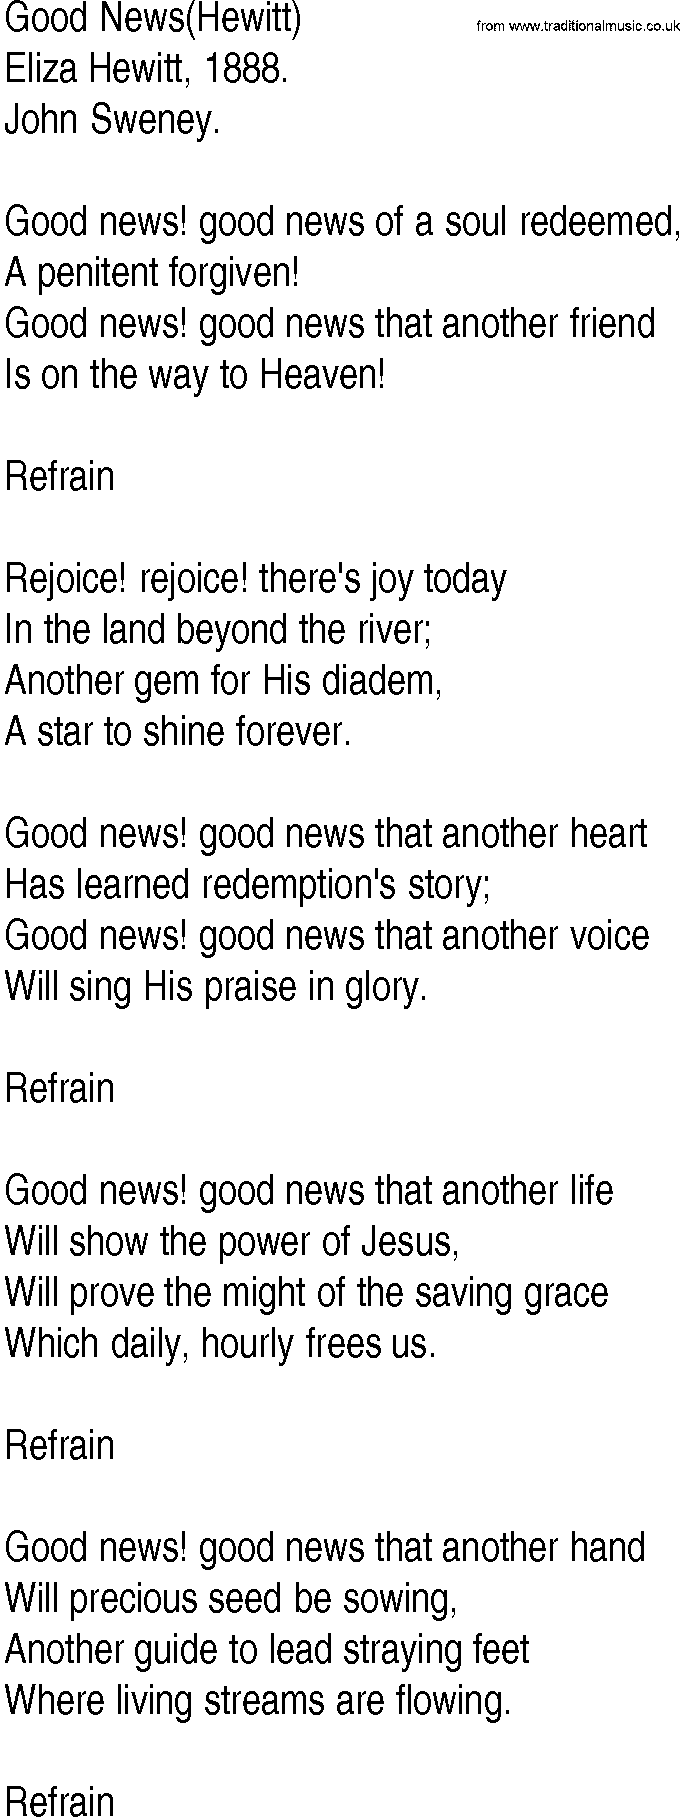 Hymn and Gospel Song: Good News(Hewitt) by Eliza Hewitt lyrics